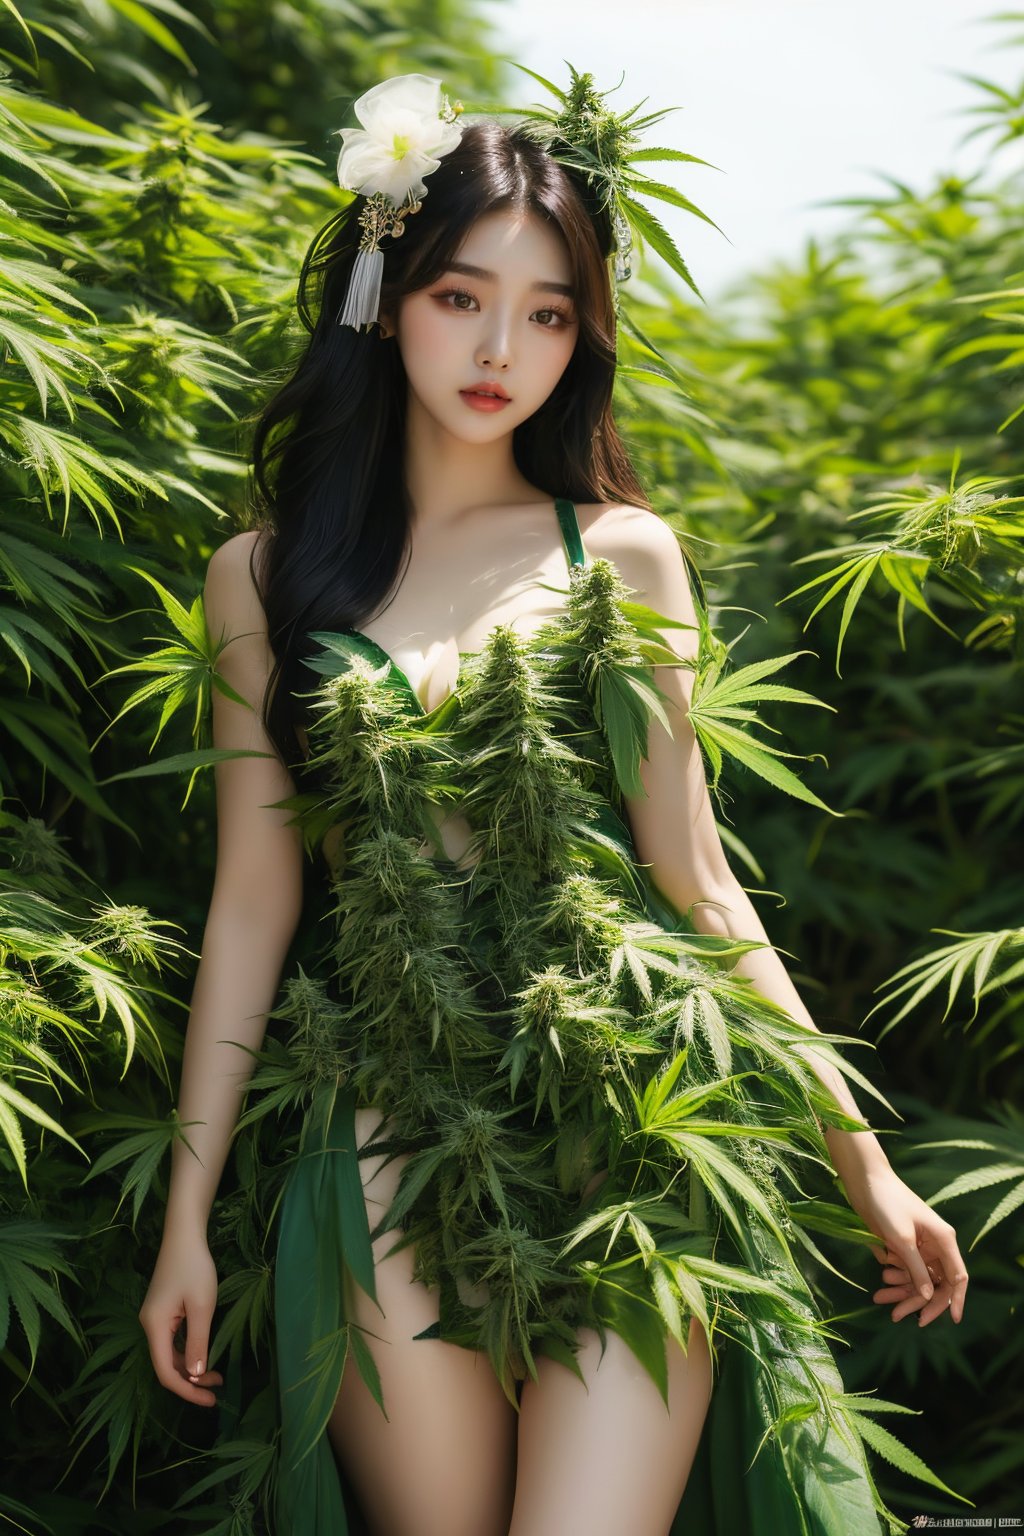 A pretty korean girl wearing dress of marijuana leaves, personification of marijuana, organic seductive geisha, woman made of plants, with green cannabis leaves, princess of cannabis, covered in plants, beautiful south korean woman,cnb,realistic